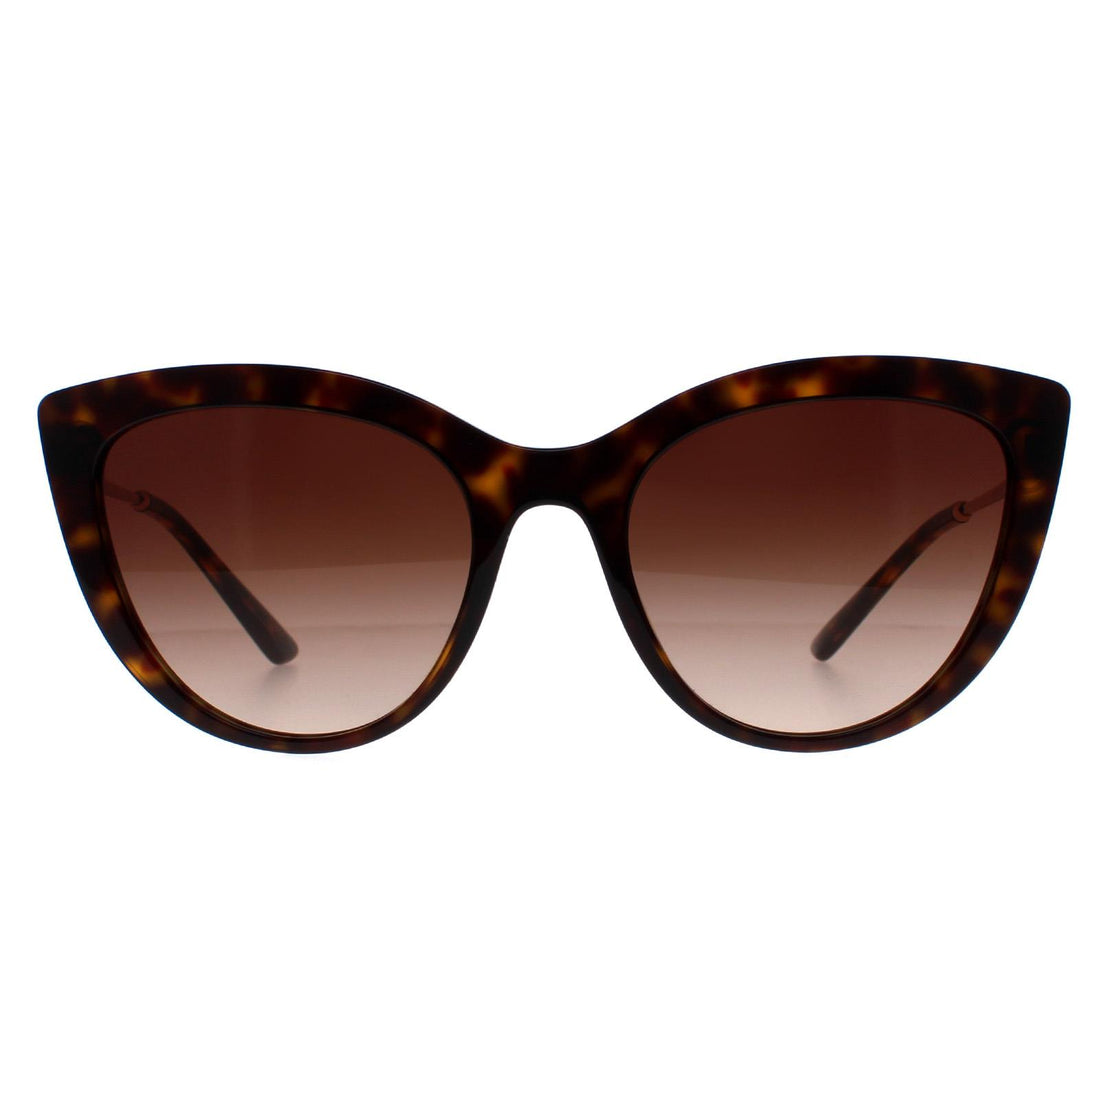 Dolce & Gabbana DG4408 Sunglasses Havana / Brown Gradient